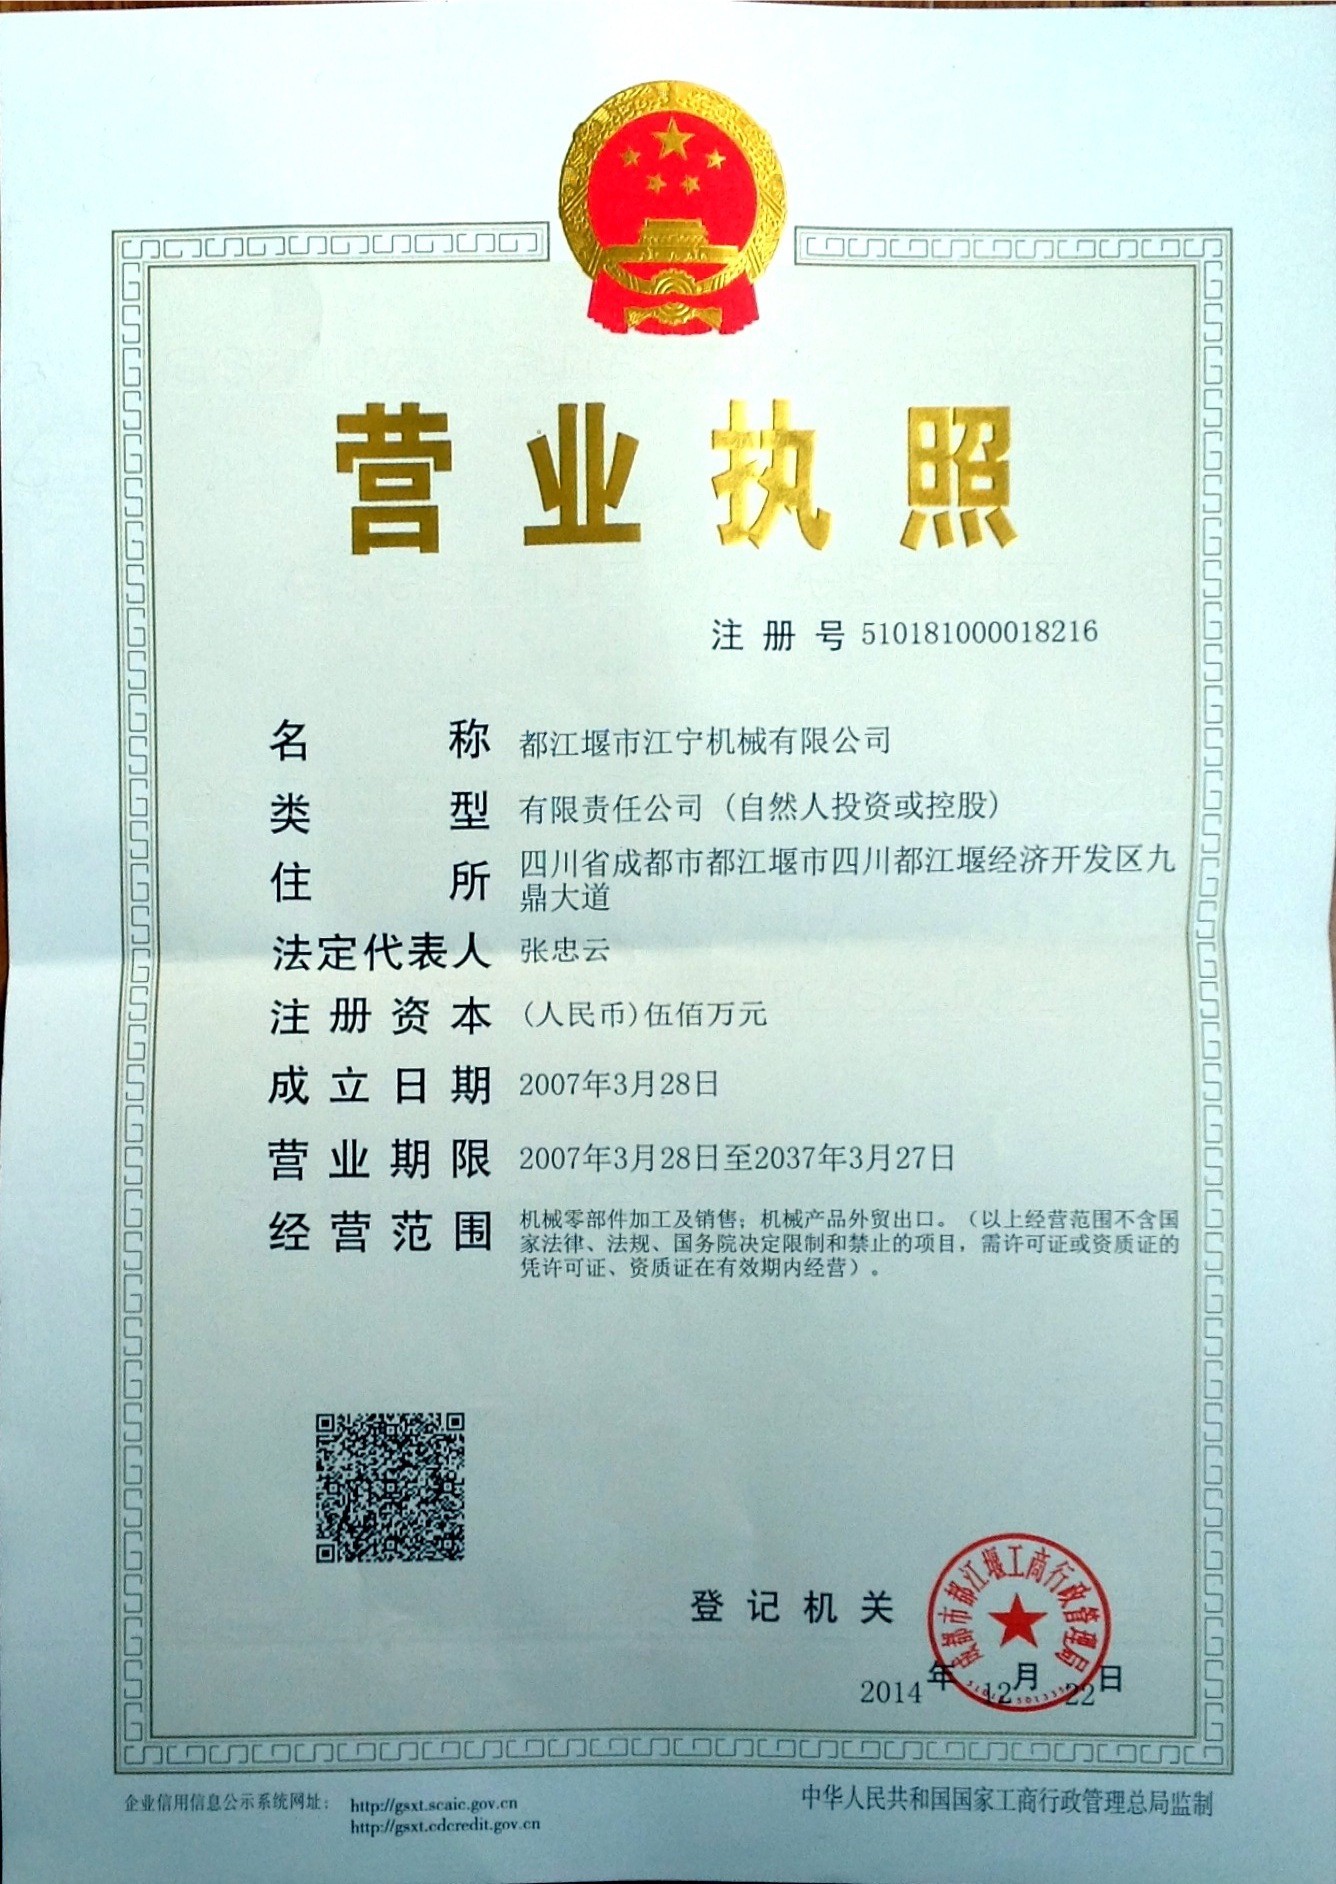 China Joiner Machinery Co., Ltd. Zertifizierungen